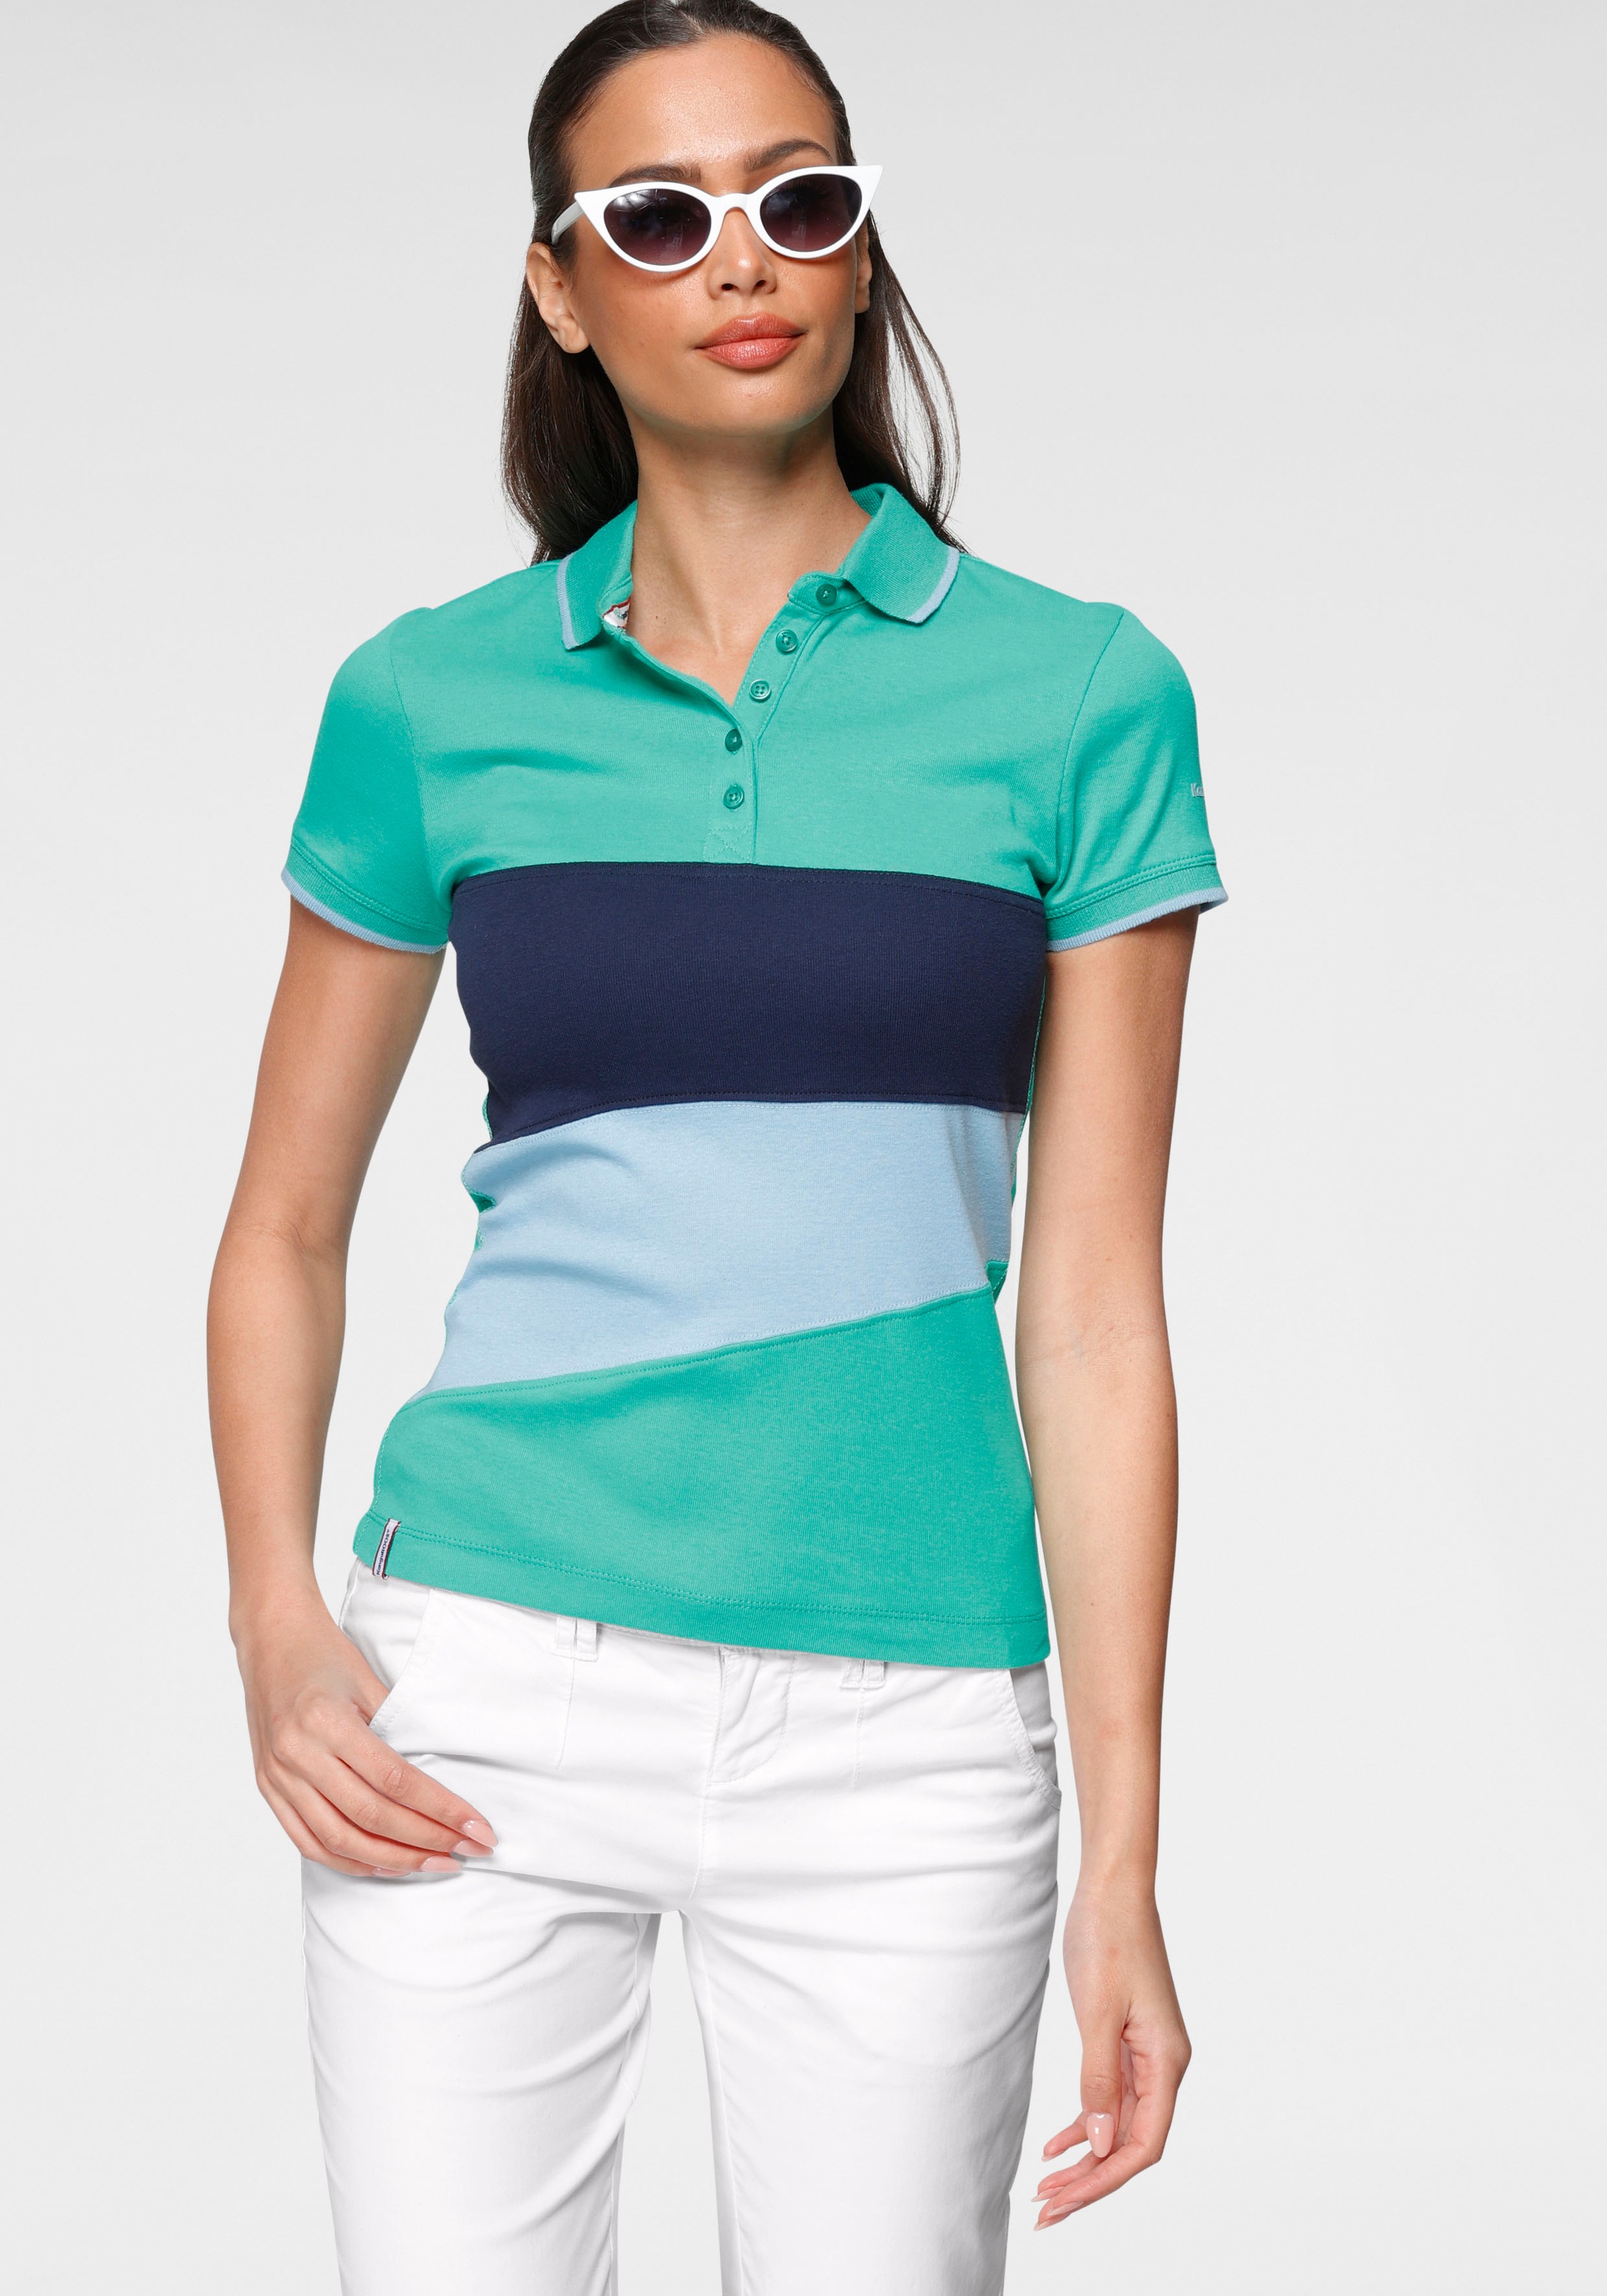 OTTO kaufen Poloshirt, bei KangaROOS Colorblocking mit